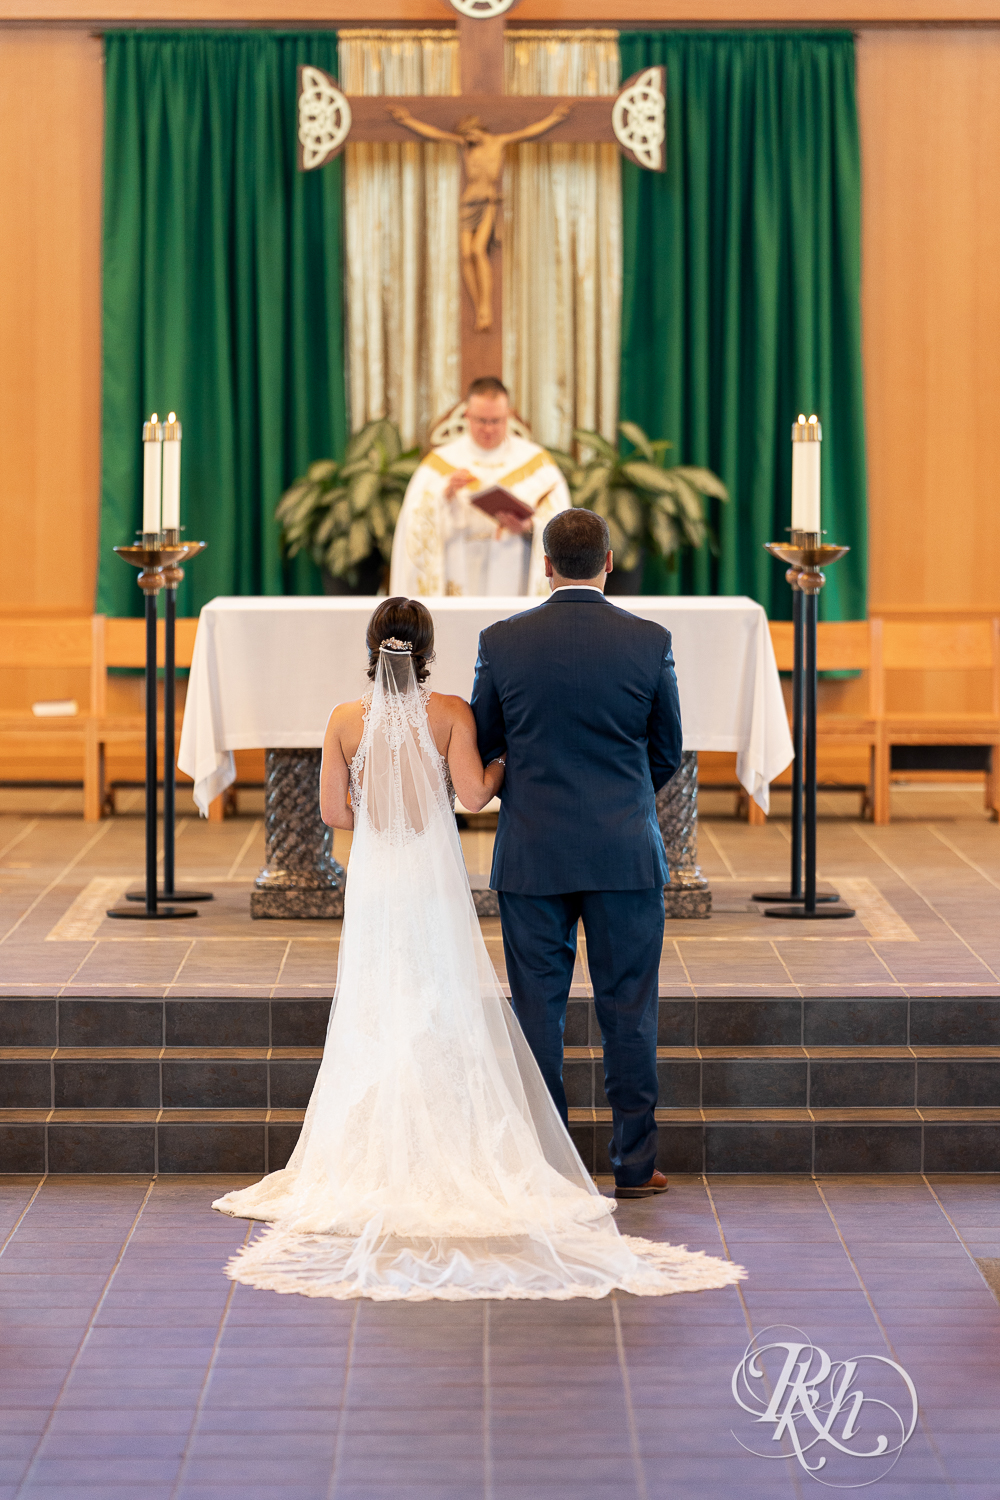 Catholic wedding ceremony at Saint Joseph Catholic Church in Rosemount, Minnesota.